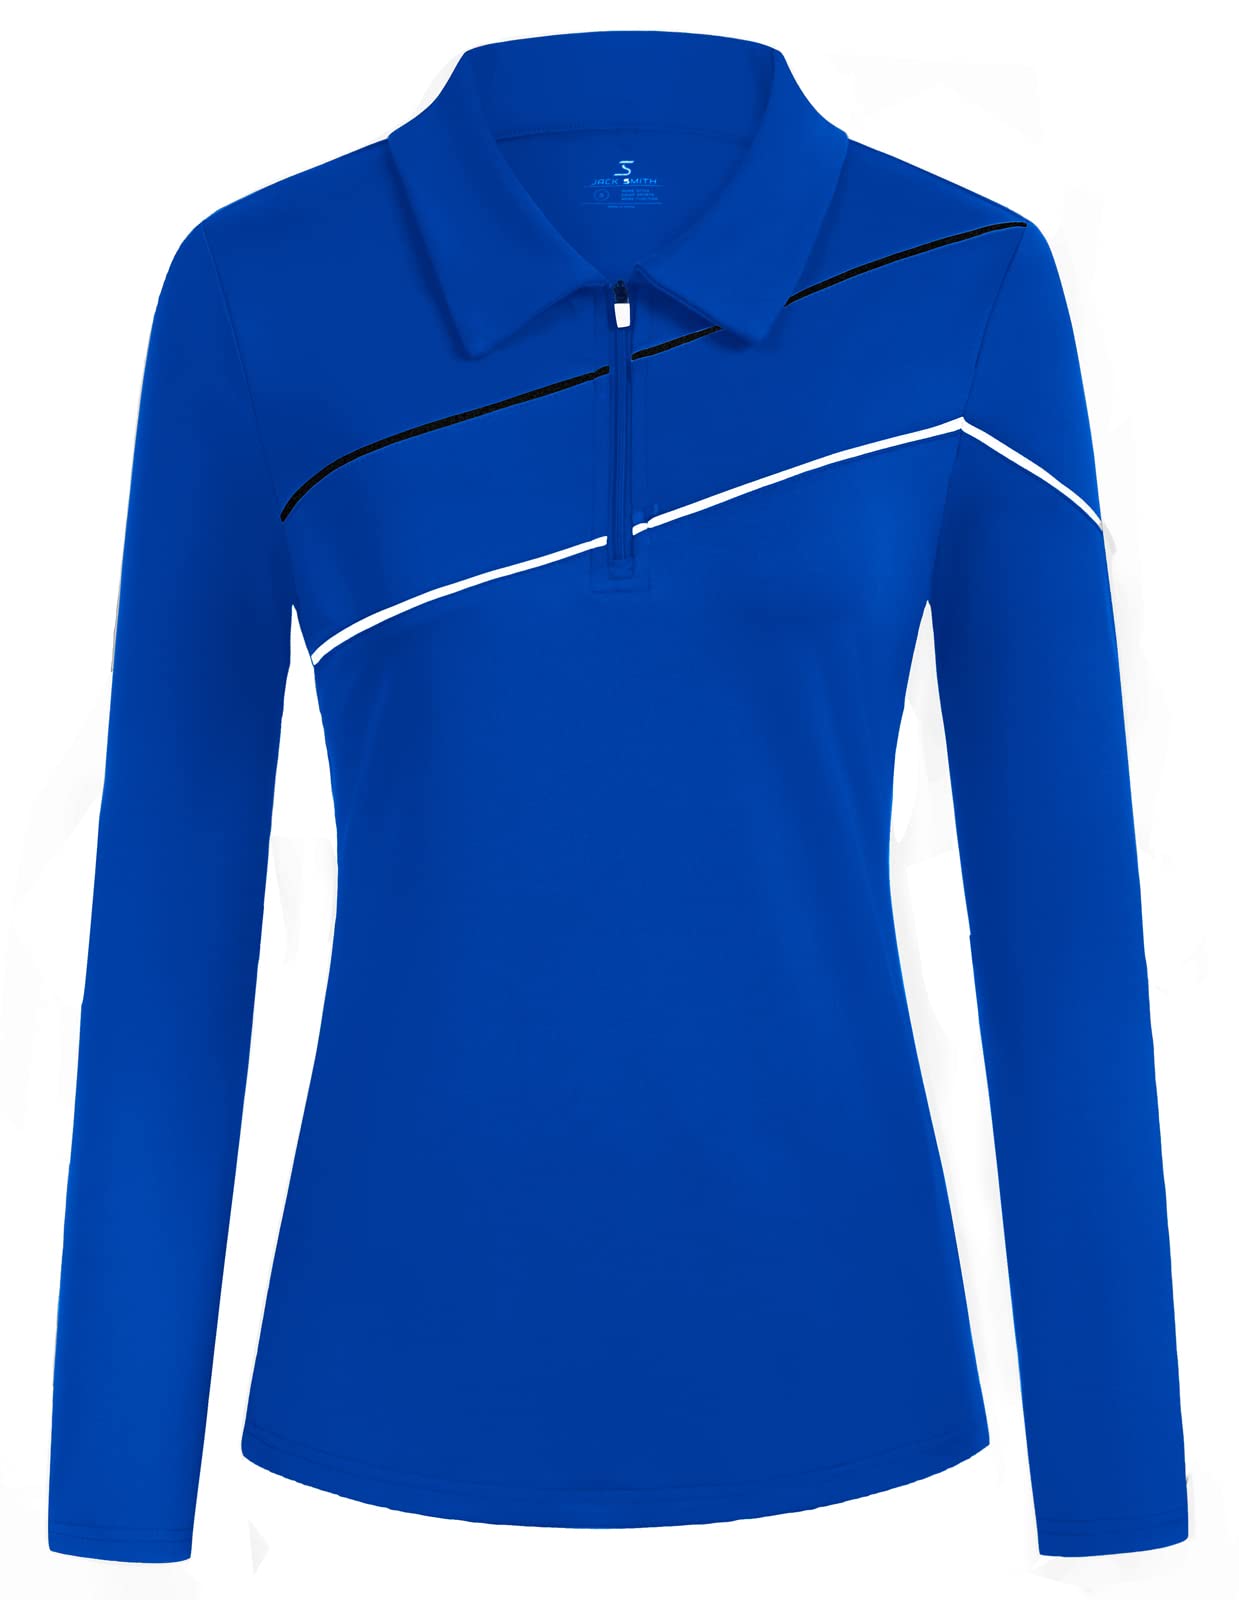 JACK SMITH Women Golf Polo Shirts Dry Fit UPF 50+ Long Sleeve